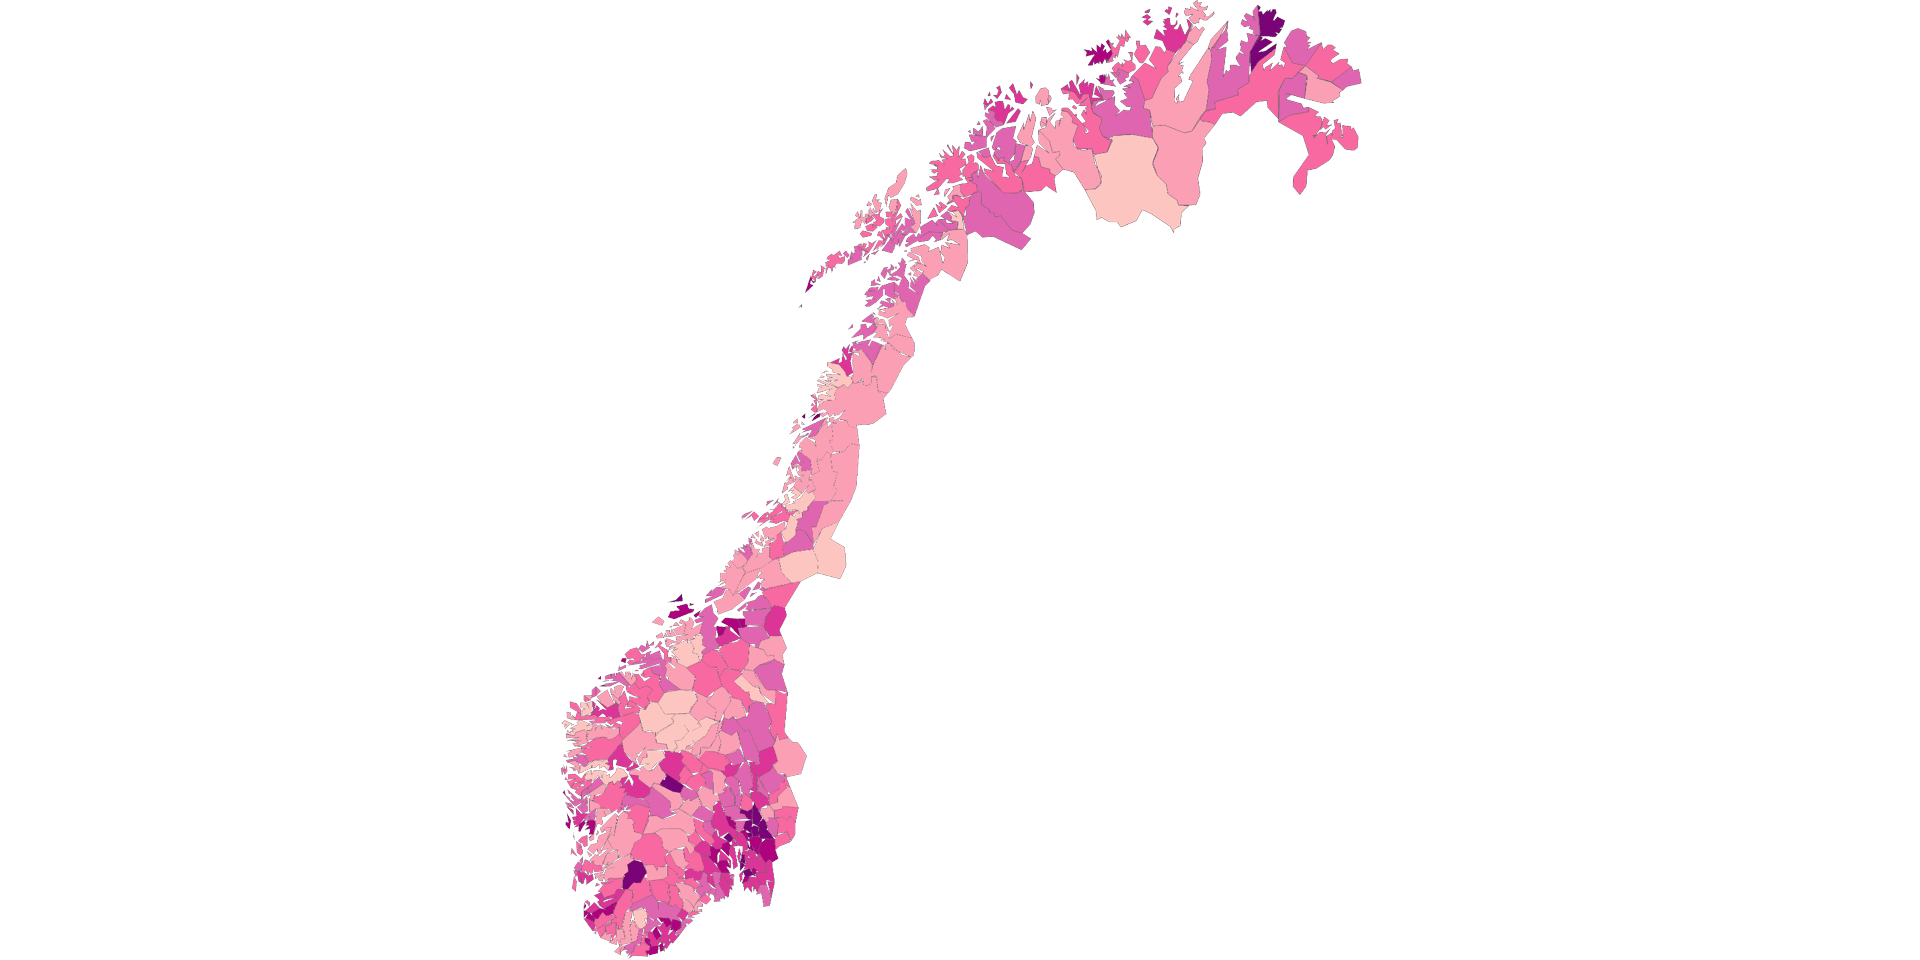 Regionale befolkningsframskrivinger i Norge frem mot 2050